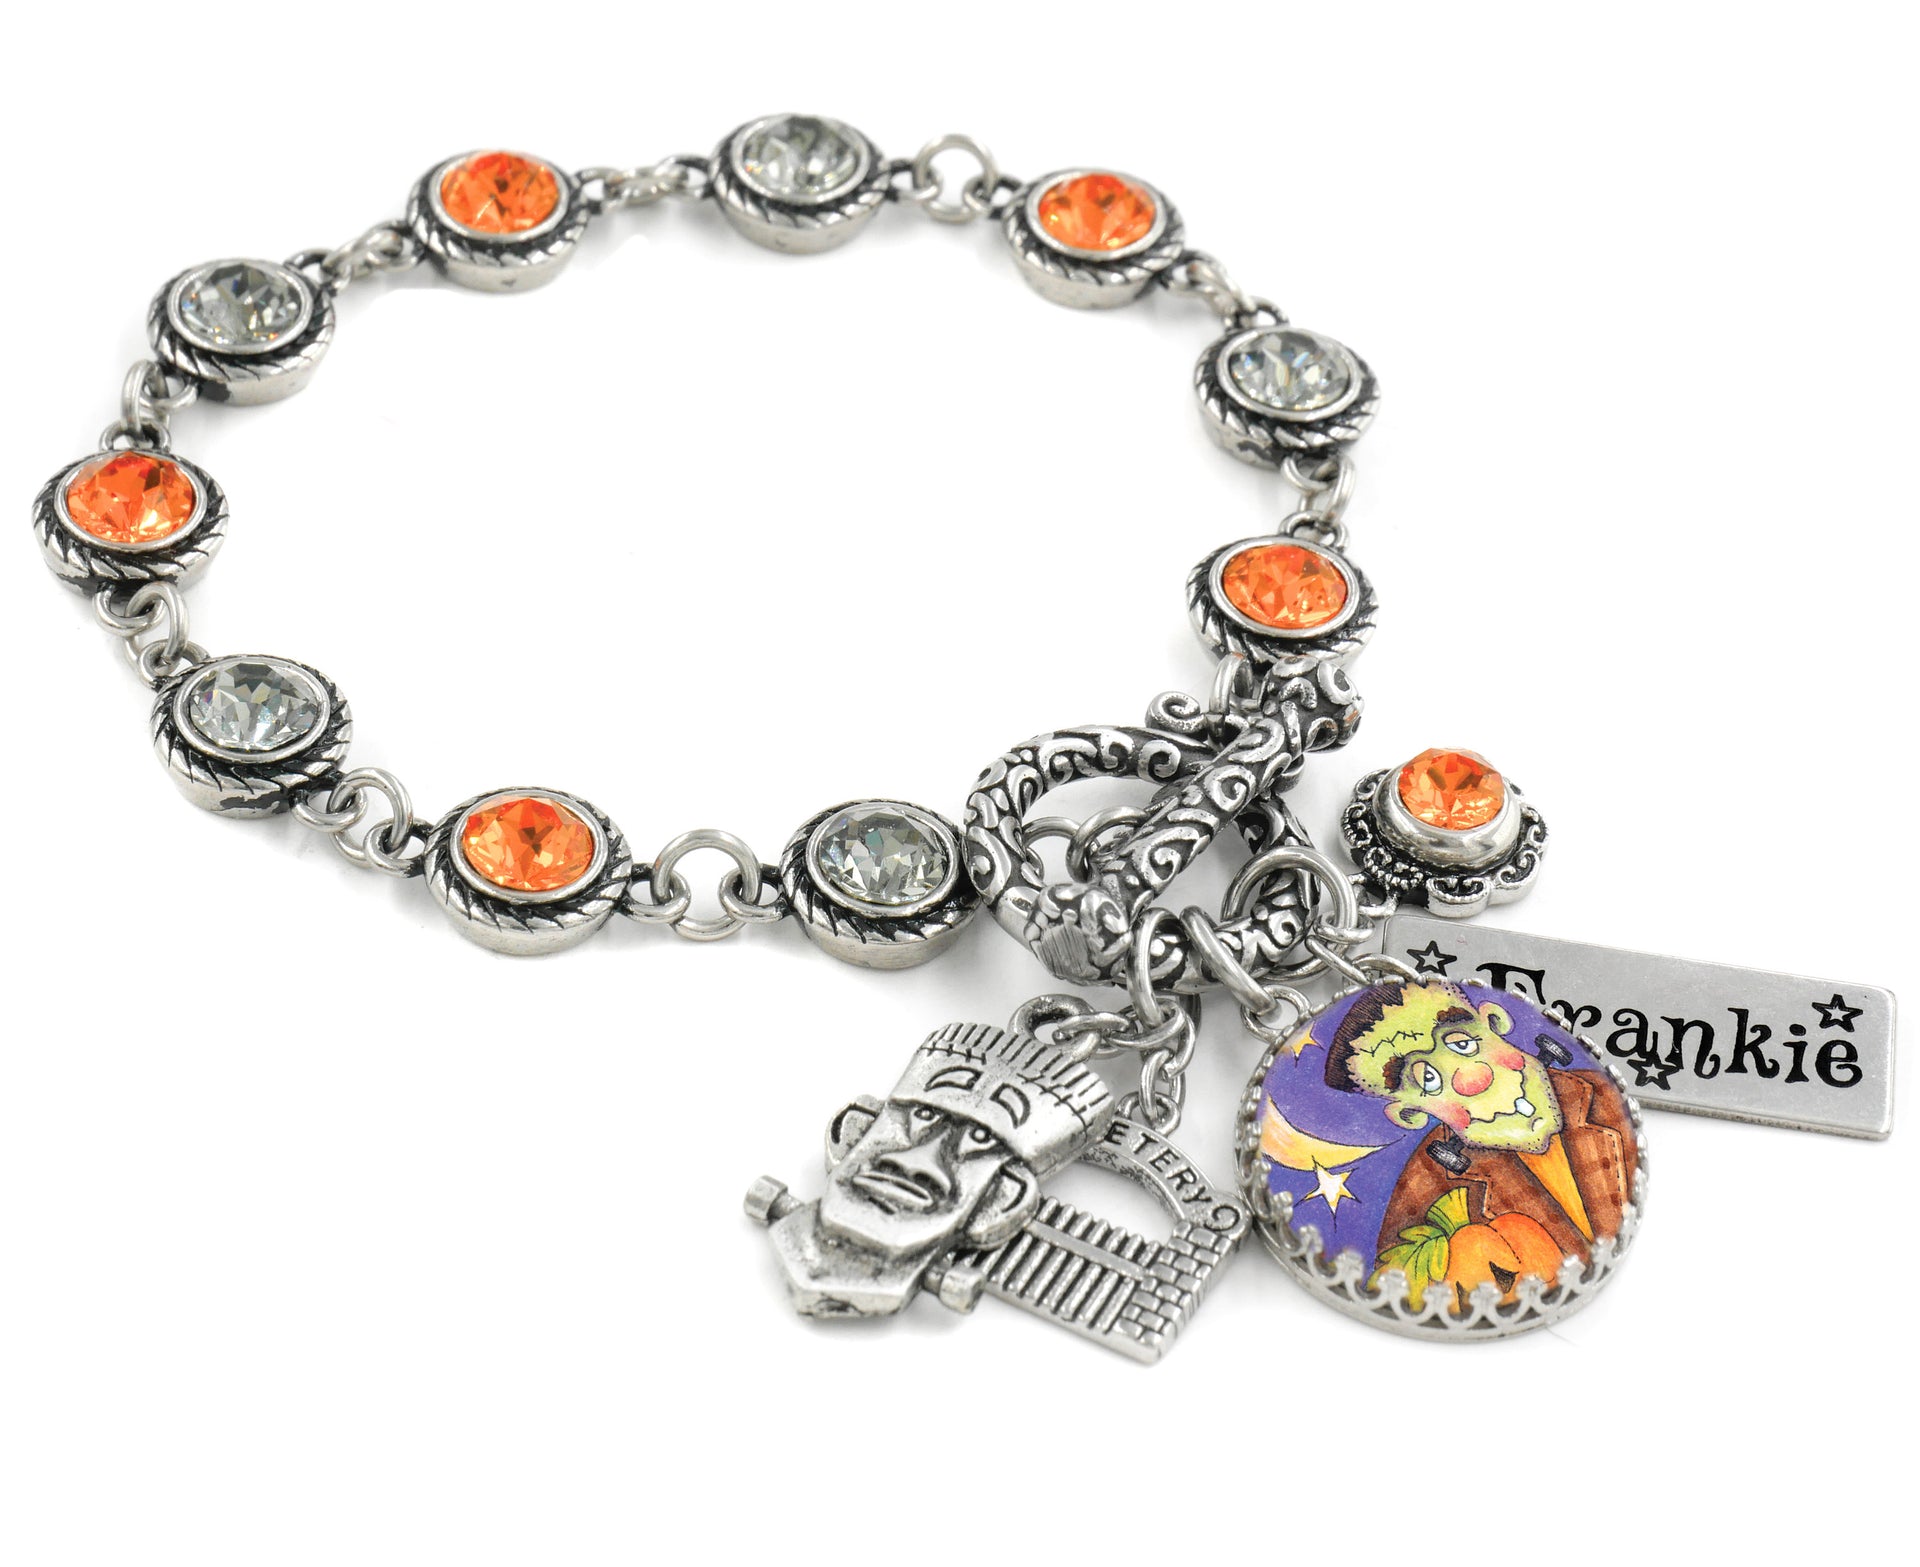 Frankenstein jewelry bracelet orange and black